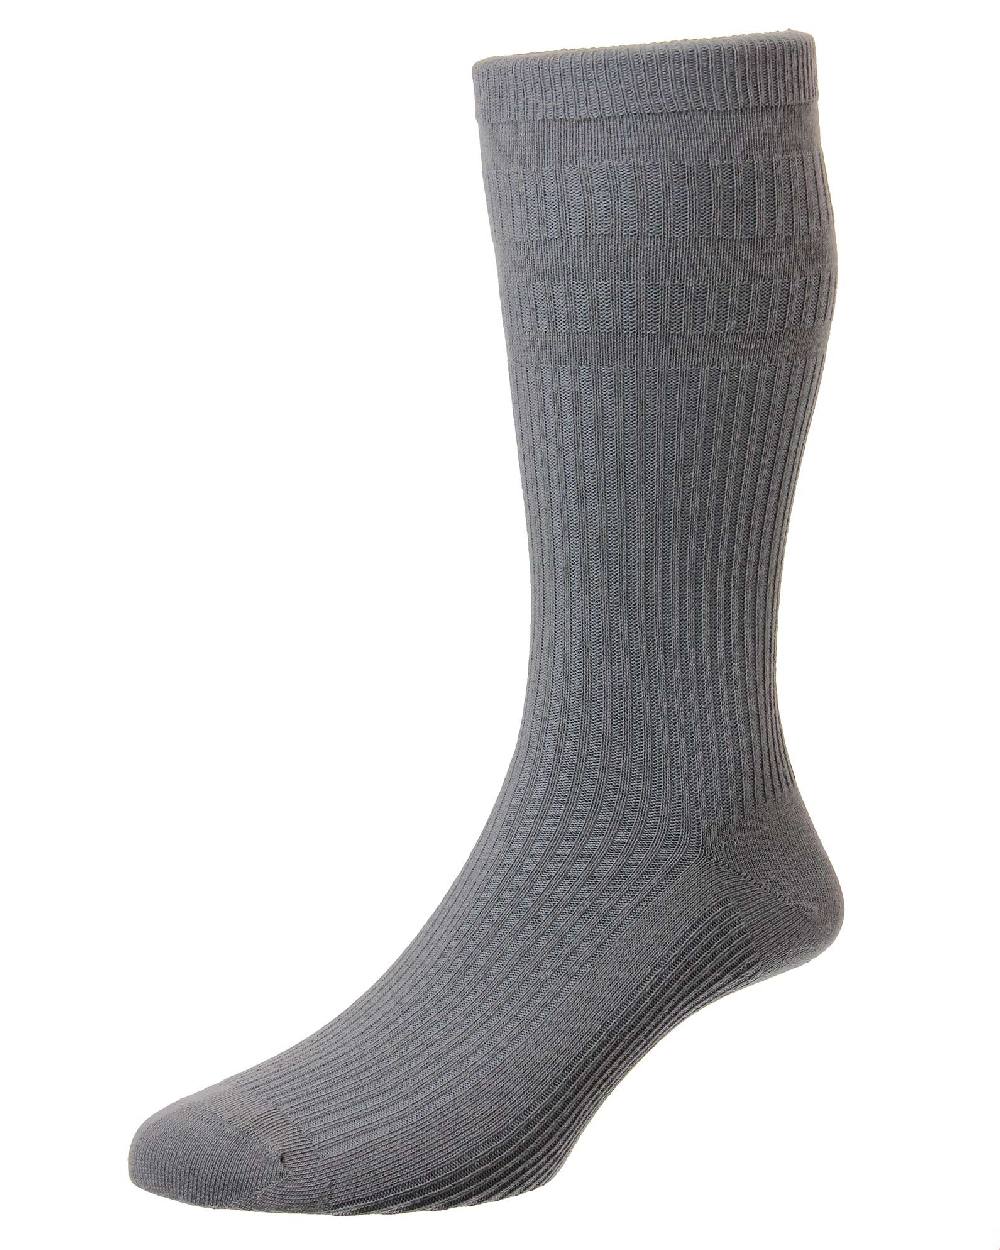 HJ Hall Original Cotton Soft Top Socks in Mid Grey 